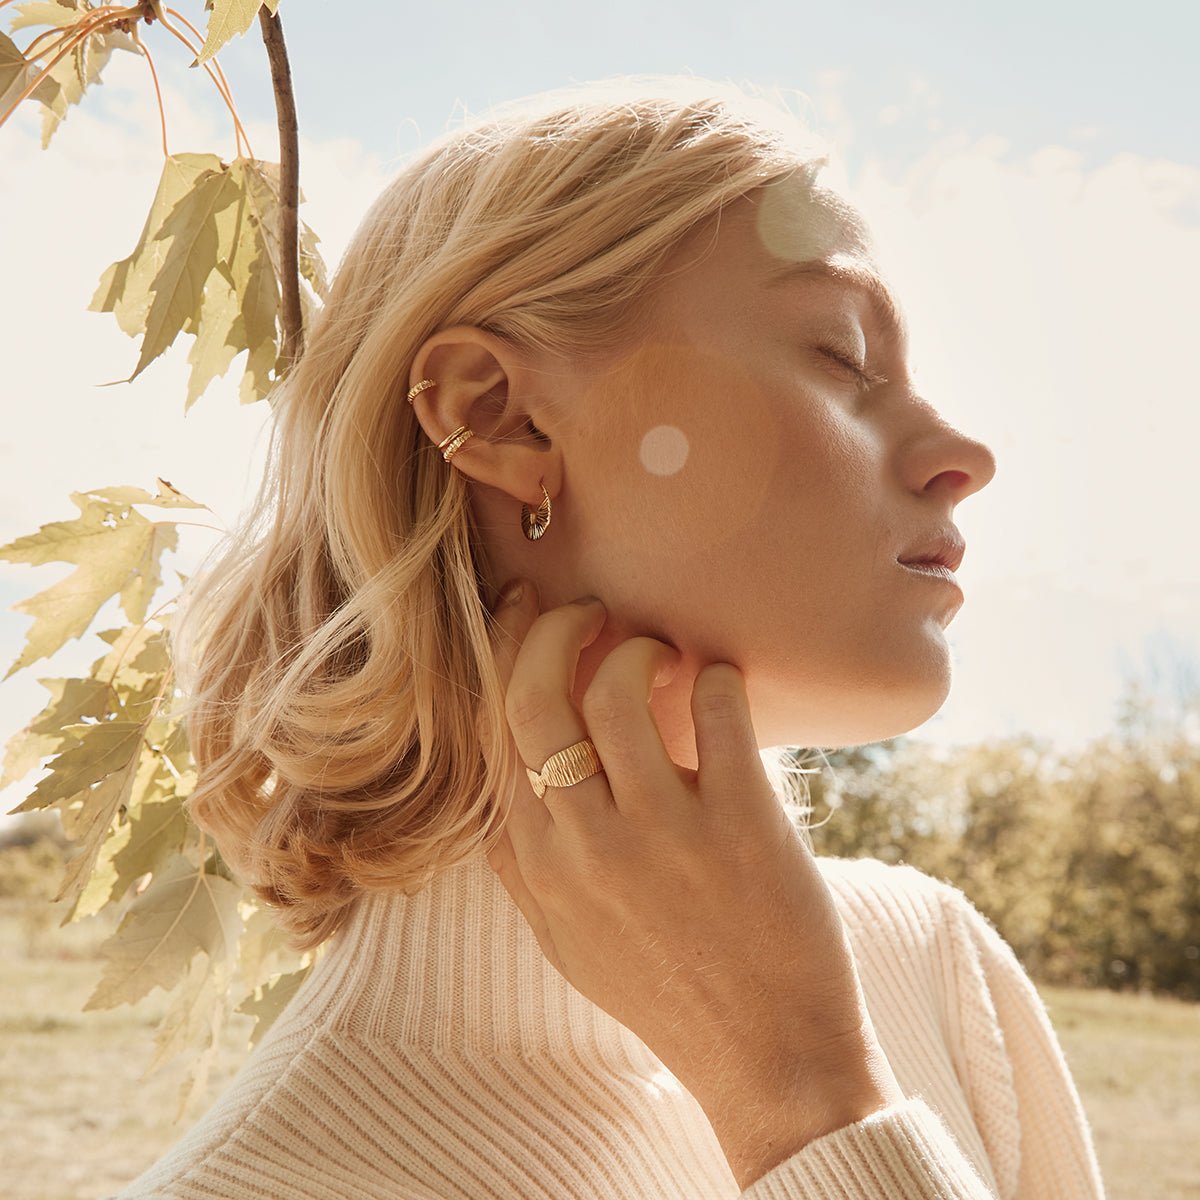 Amazon.com: NANDUDU Gold Hoop Earrings for Women Small Huggie Gold Earrings  Thick Hoop Jewelry - Gifts for Teens Girls (Ball): Clothing, Shoes & Jewelry